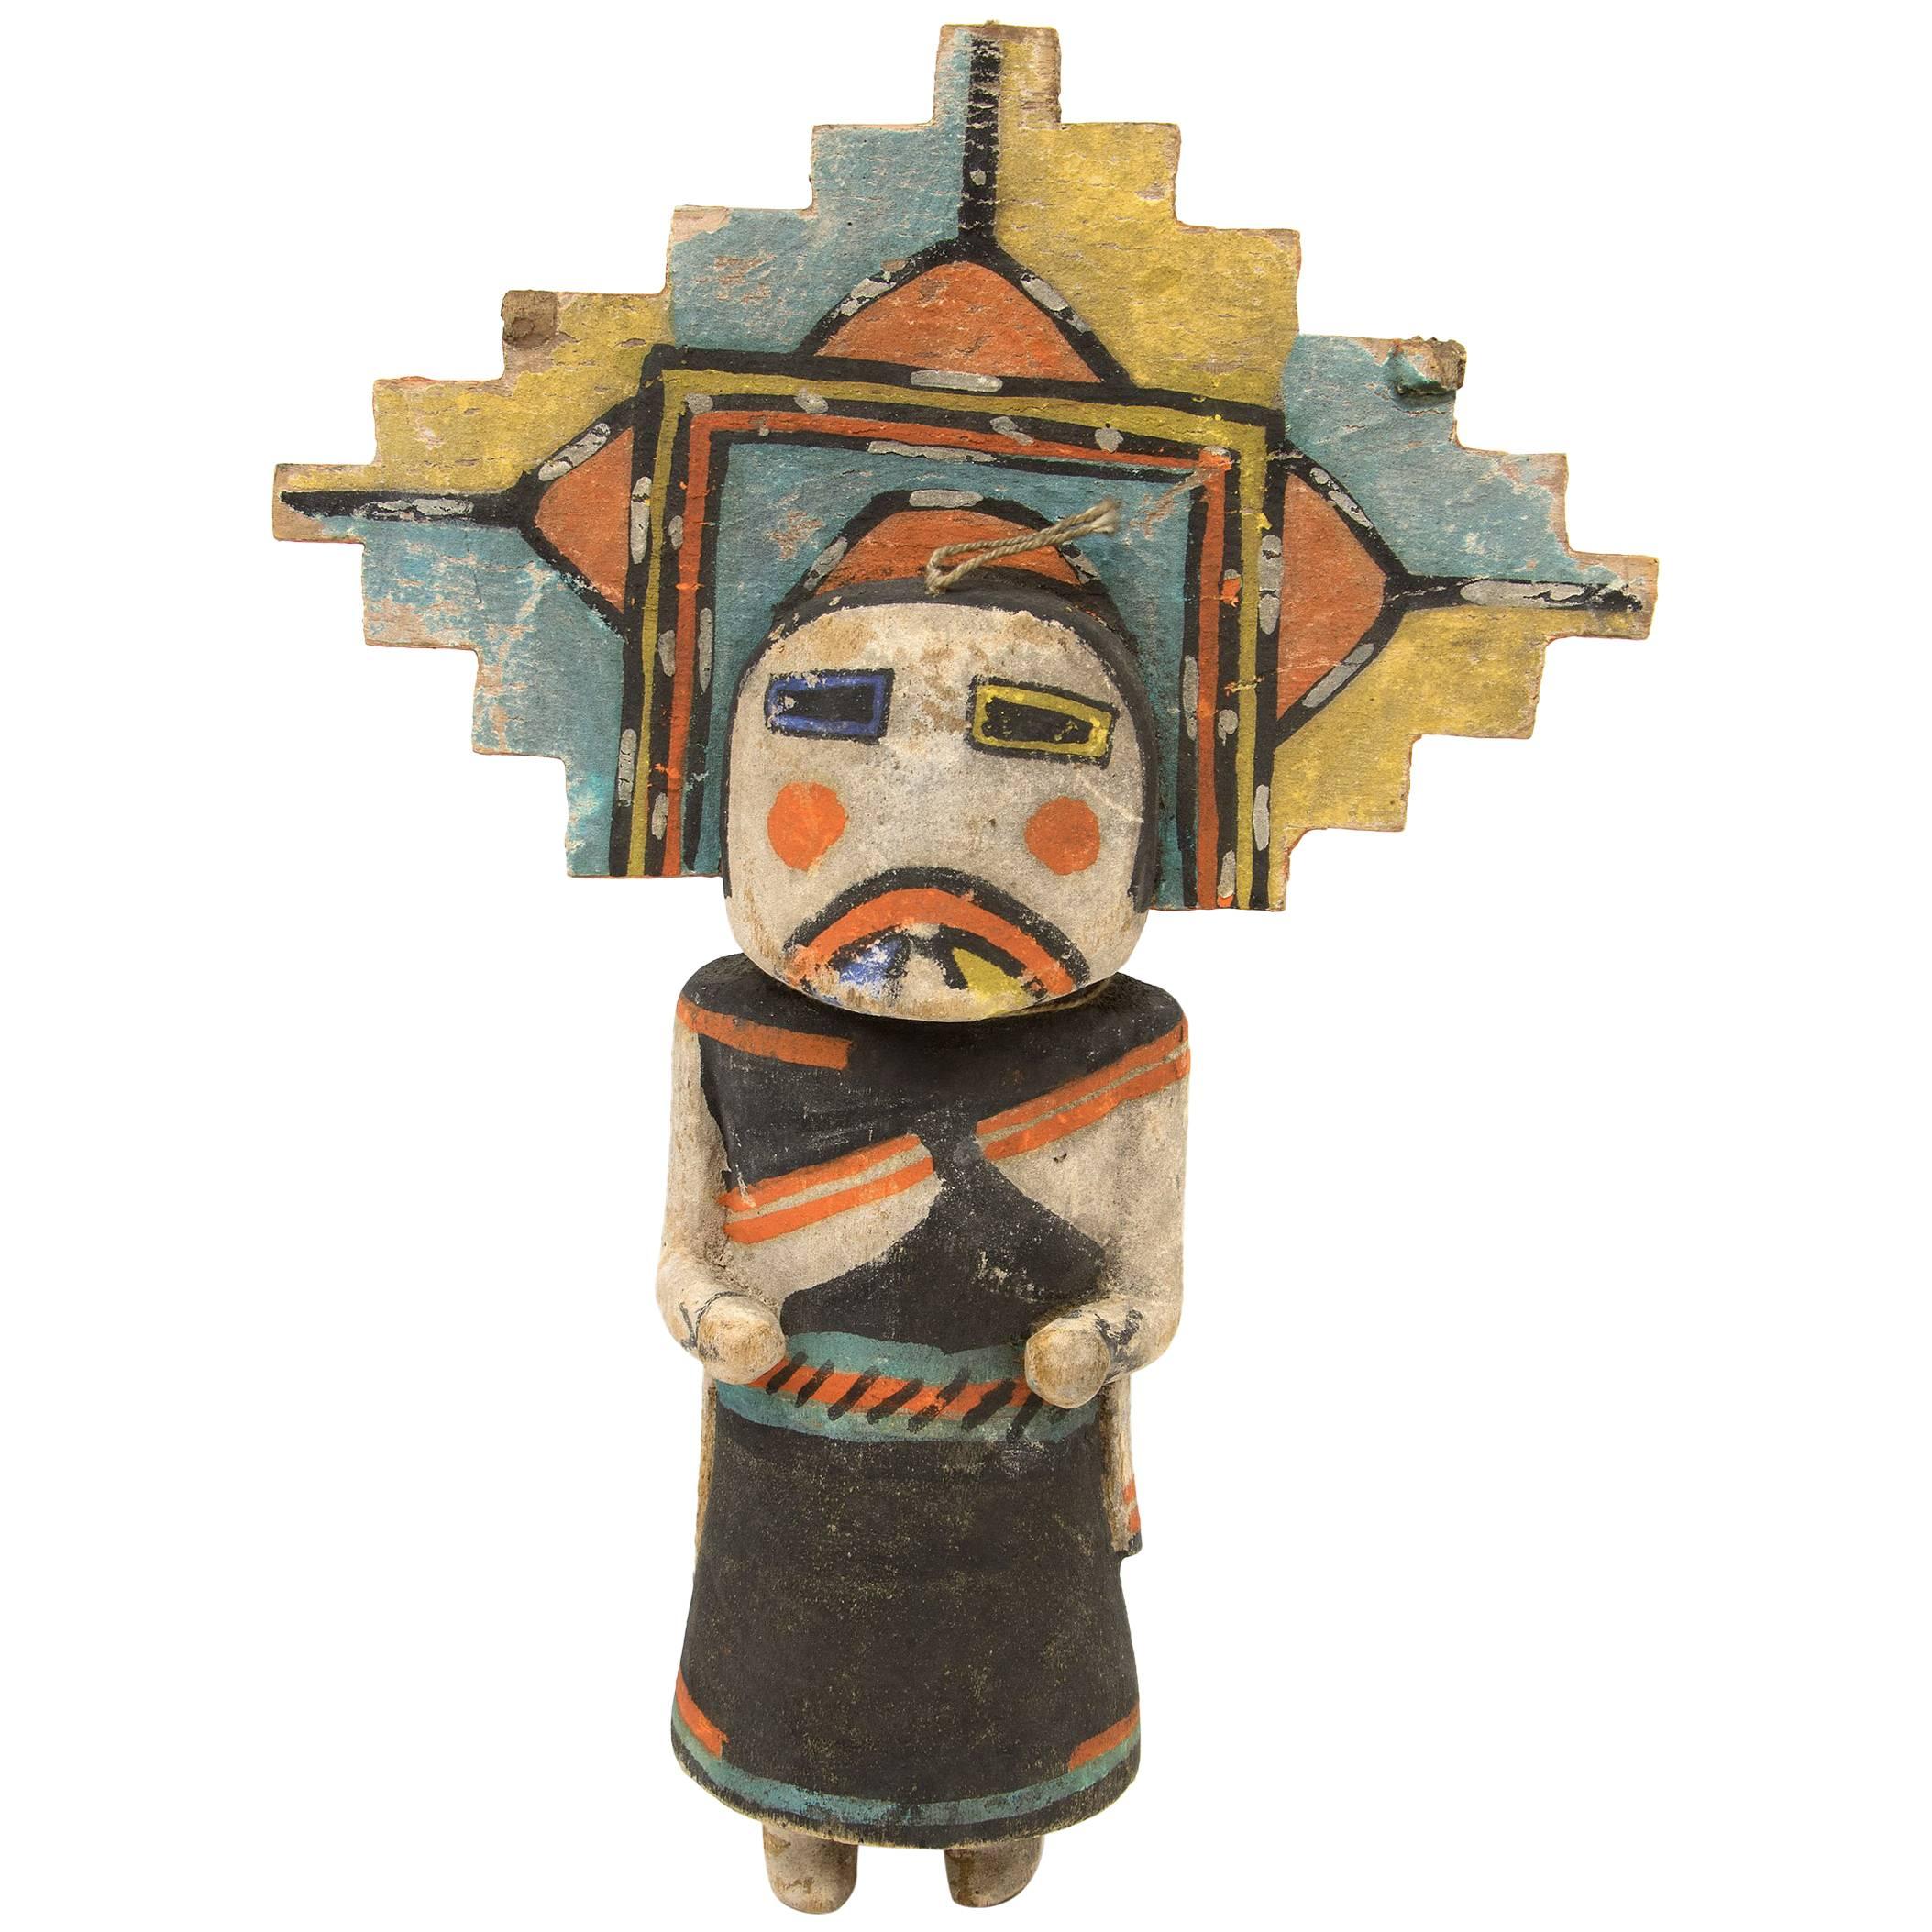 Antique Native American Kachina Doll, "Salako Mana", Hopi, Early 20th Century